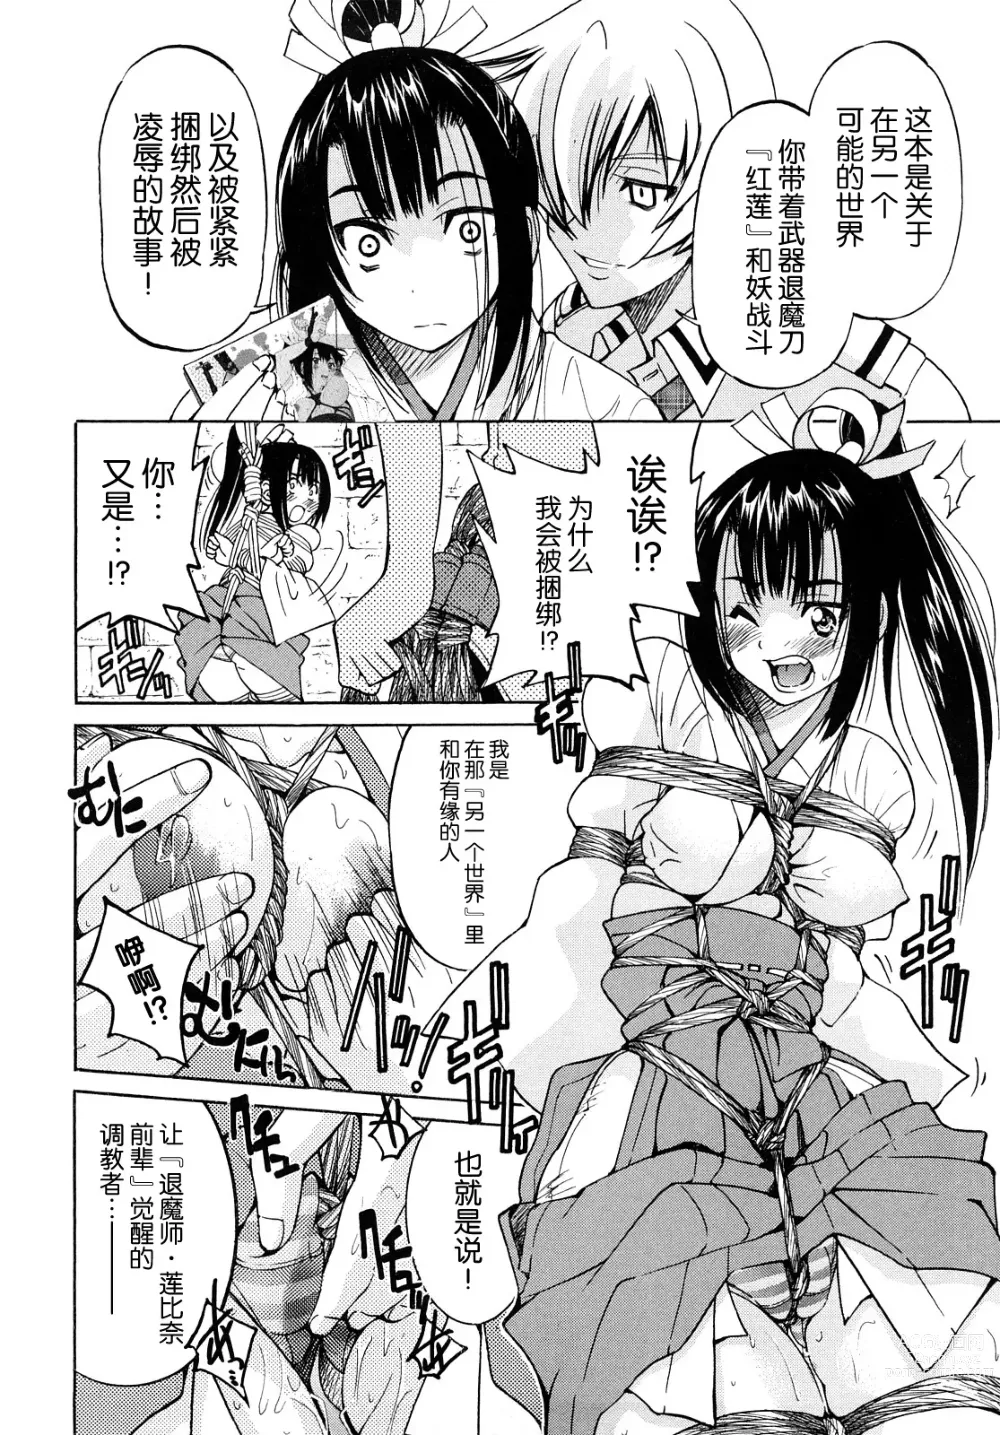 Page 209 of manga Shibarare Hime